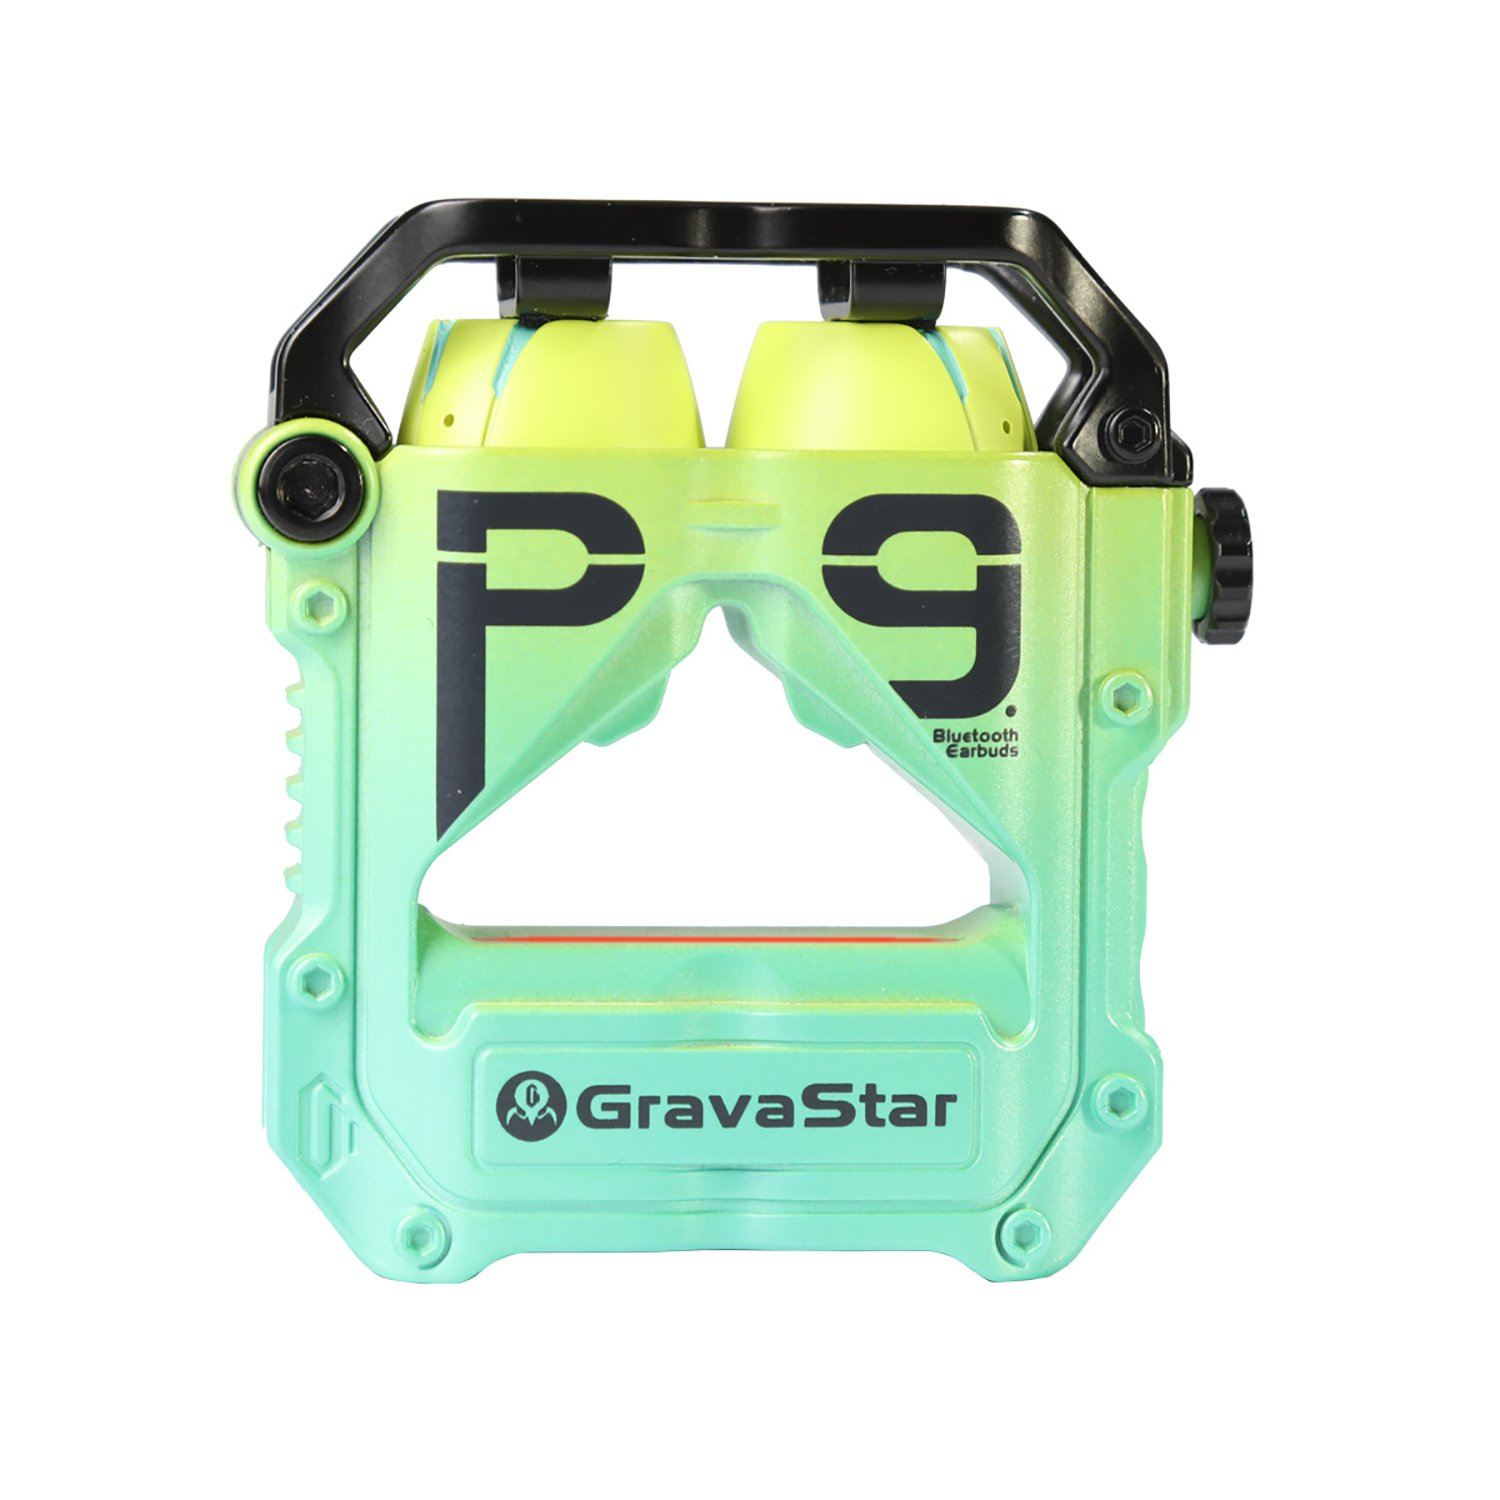 Gravastar Sirius Pro True Wireless ENC Earbuds IPX5 Water Resistance Touch Control Default Gravastar 